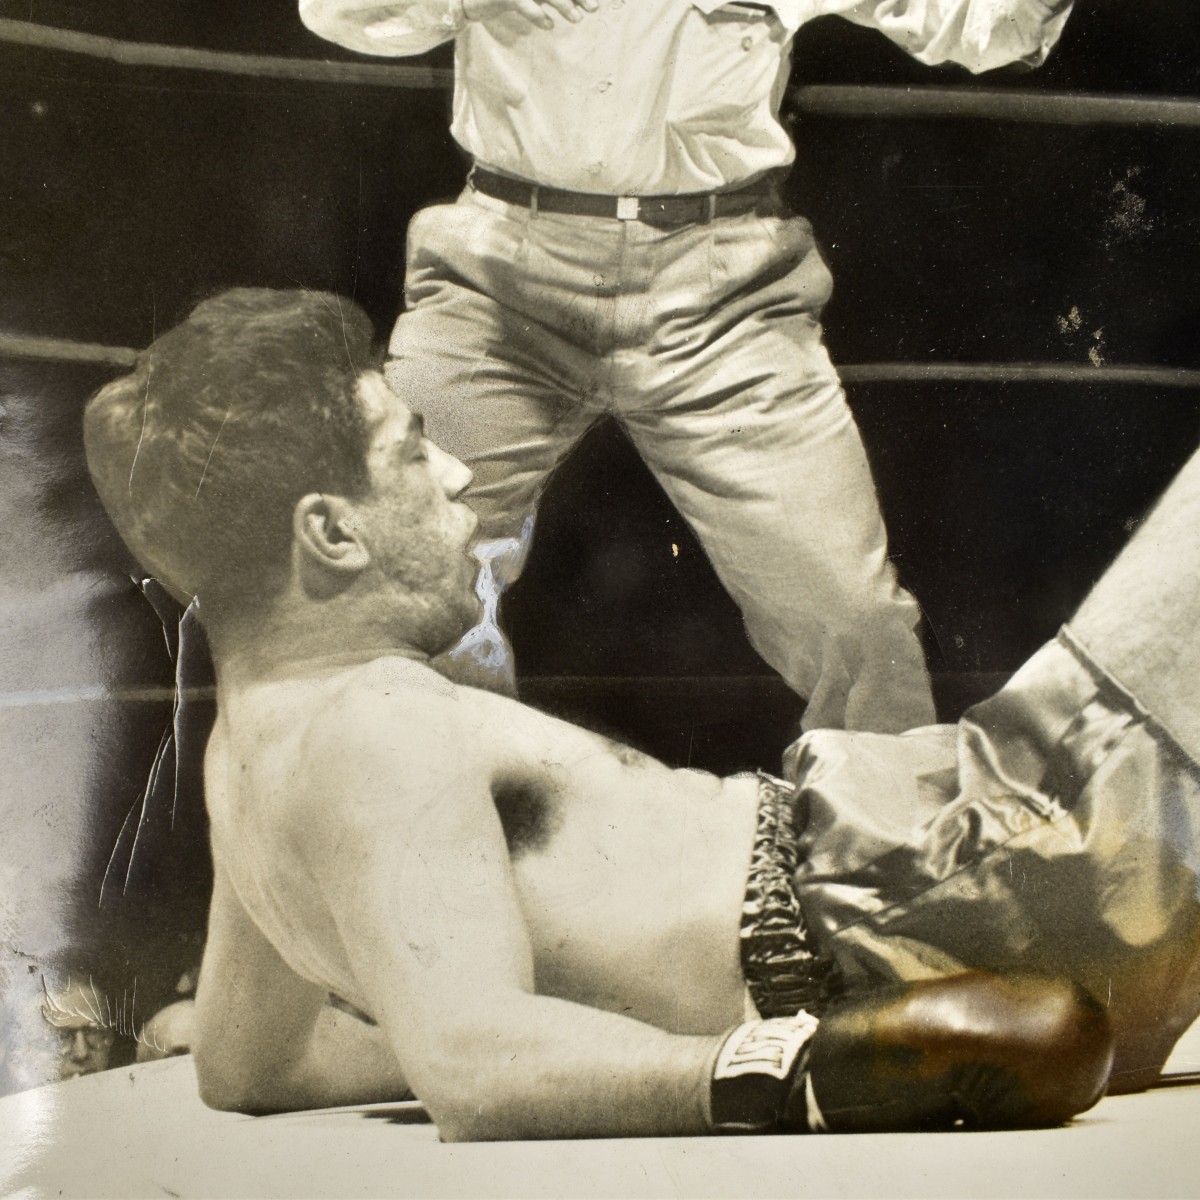 Original Boxing Photograph Memorabilia